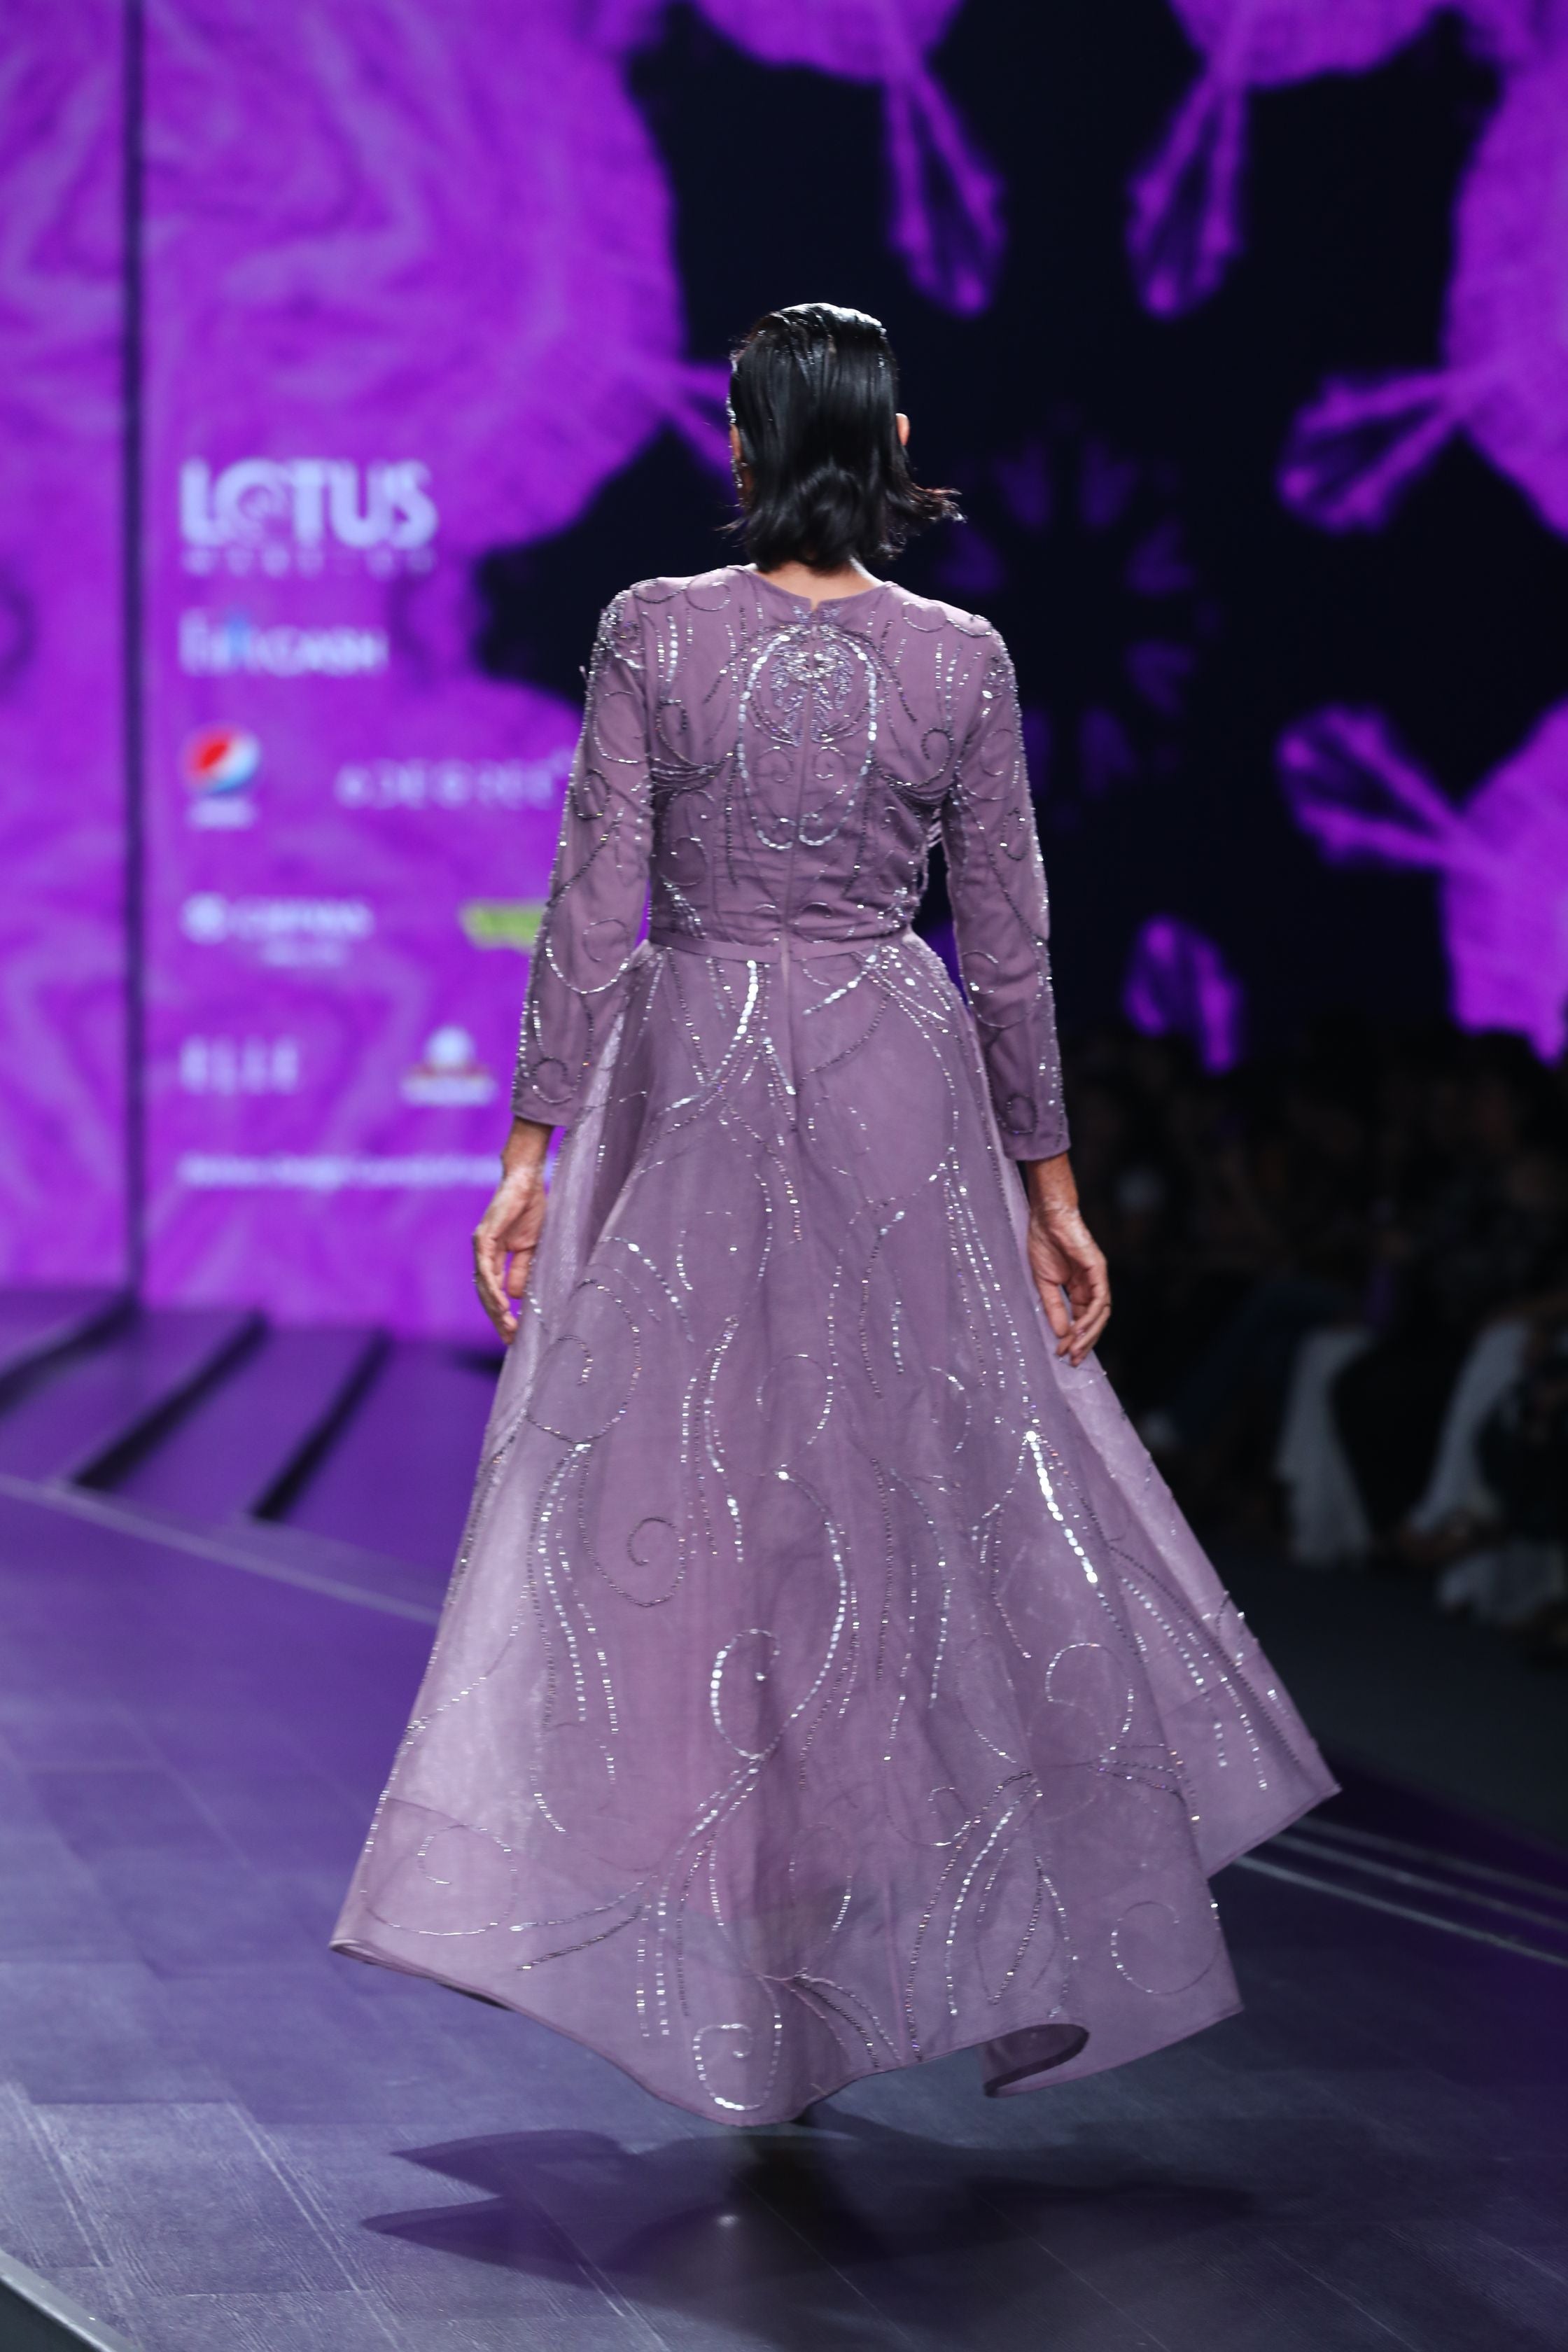 Amit GT - Lavender bird motif dress 